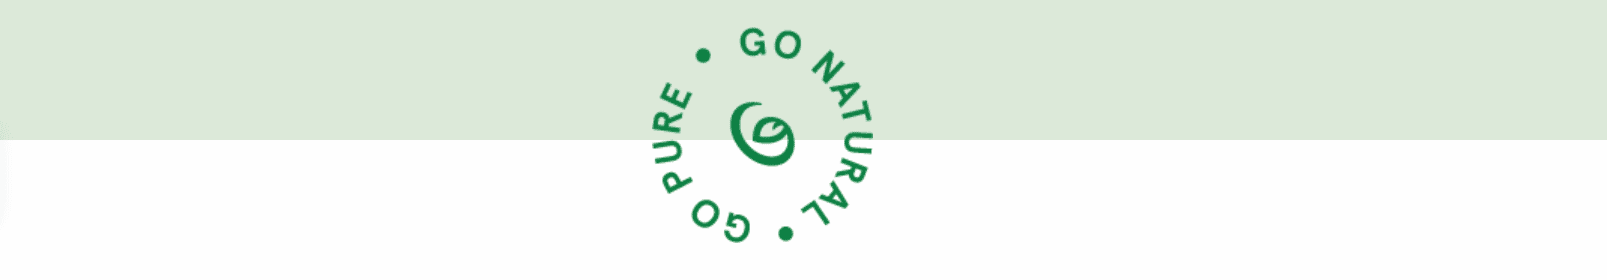 image of gopure kratom shop logo